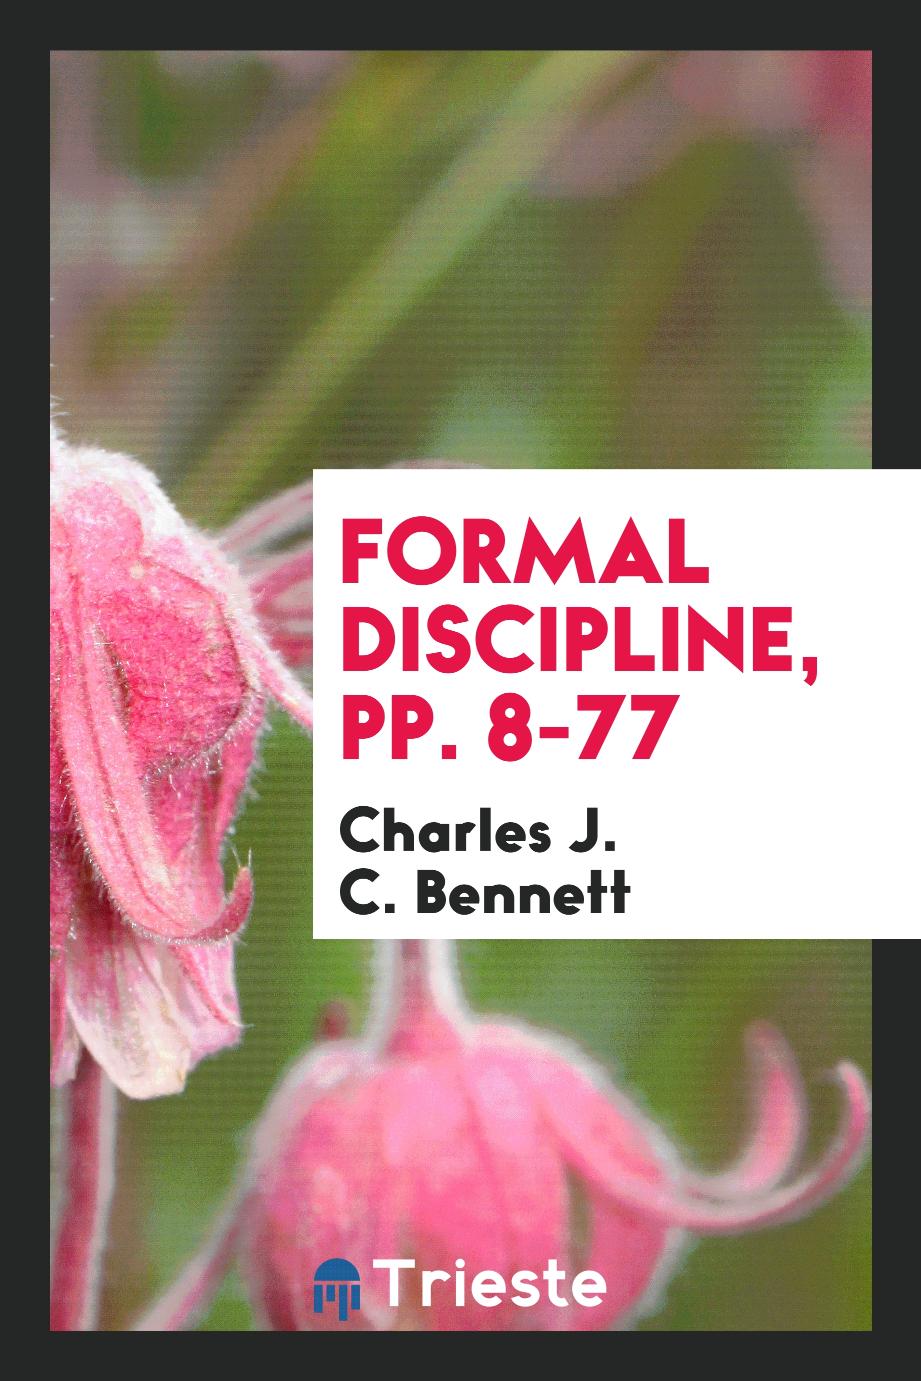 Formal Discipline, pp. 8-77